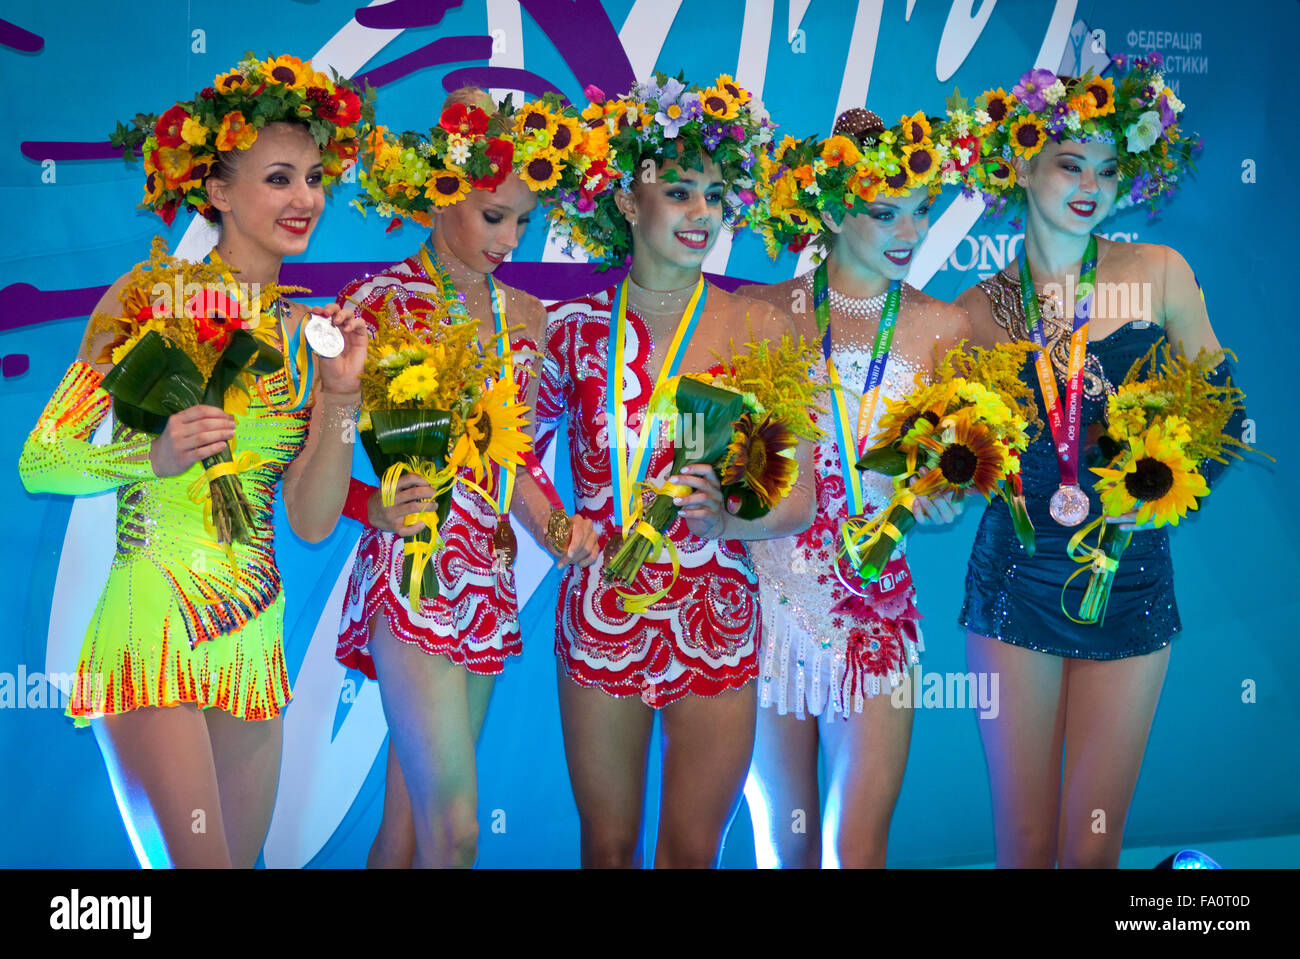 KYIV, UKRAINE - AUGUST 29, 2013: All medalists of 32nd Rhythmic Gymnastics World Championship stand at podium on August 29, 2013 in Kyiv, Ukraine Stock Photo